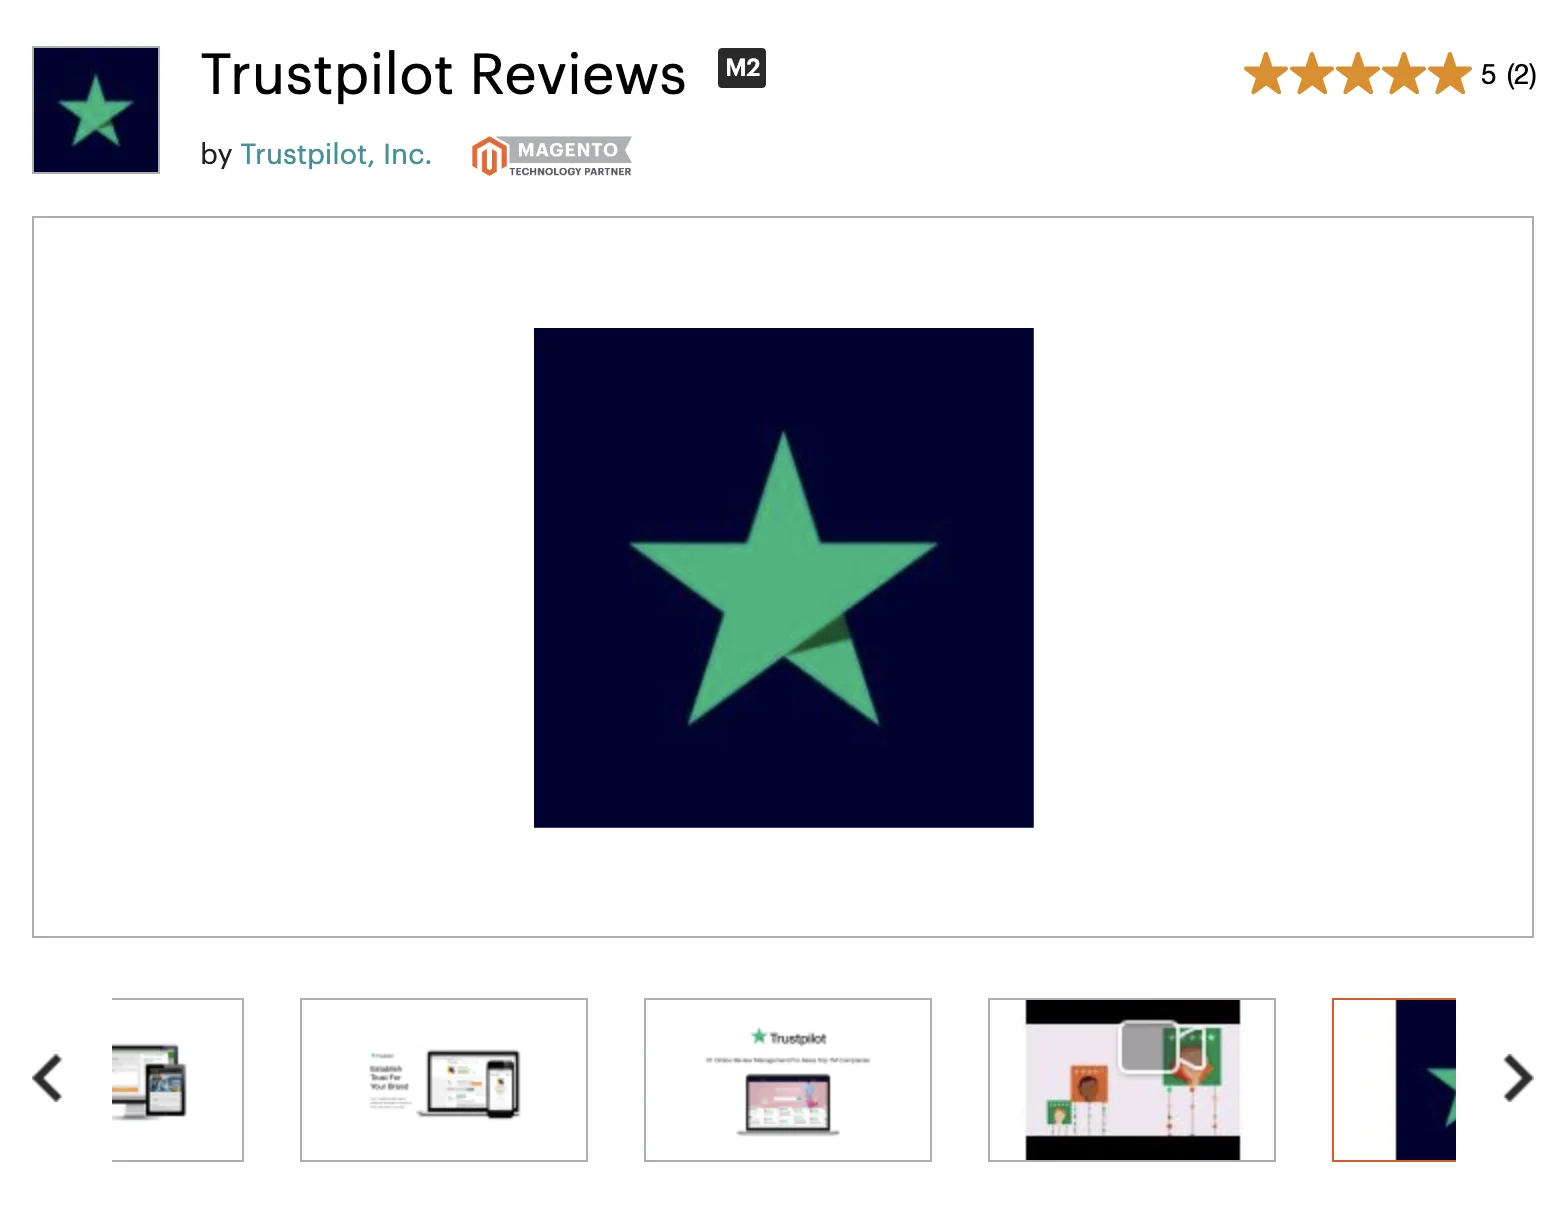 Trustpilot Reviews Extension for Magento